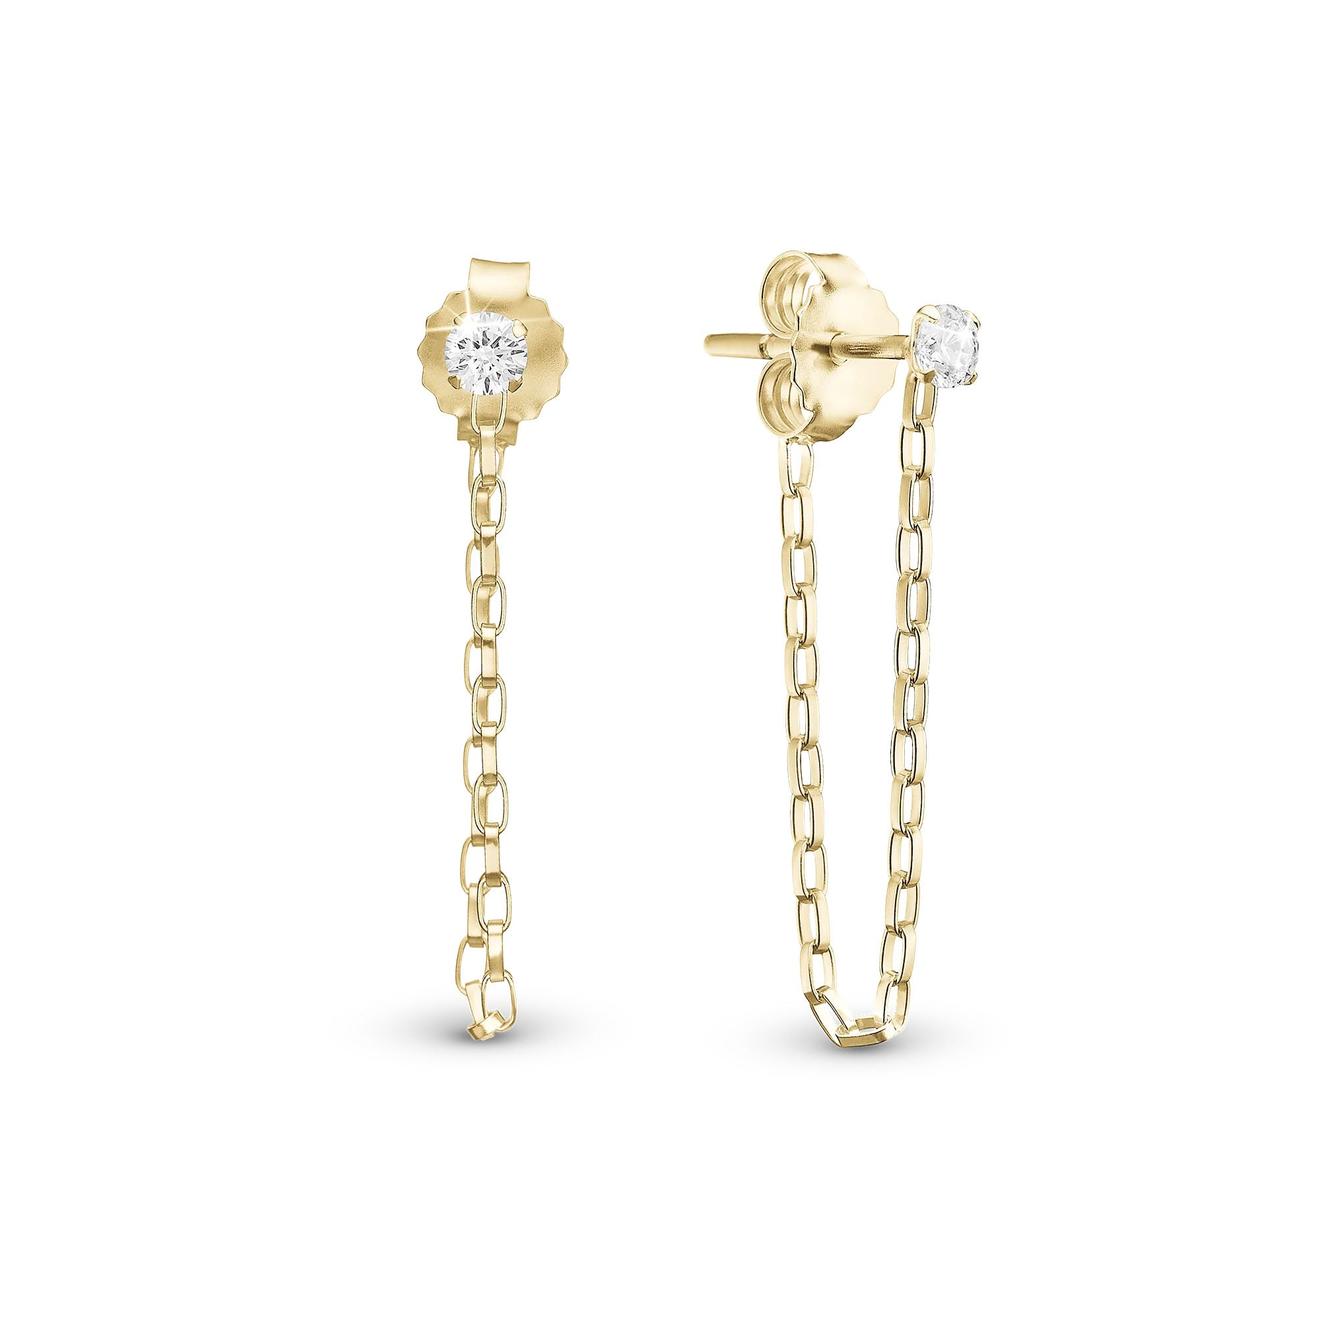 Christina Jewelry & Watches - White CZ chain ørestikker - Forgyldt sølv på tilbud til 149,5 kr. hos Vibholm Guld & Sølv